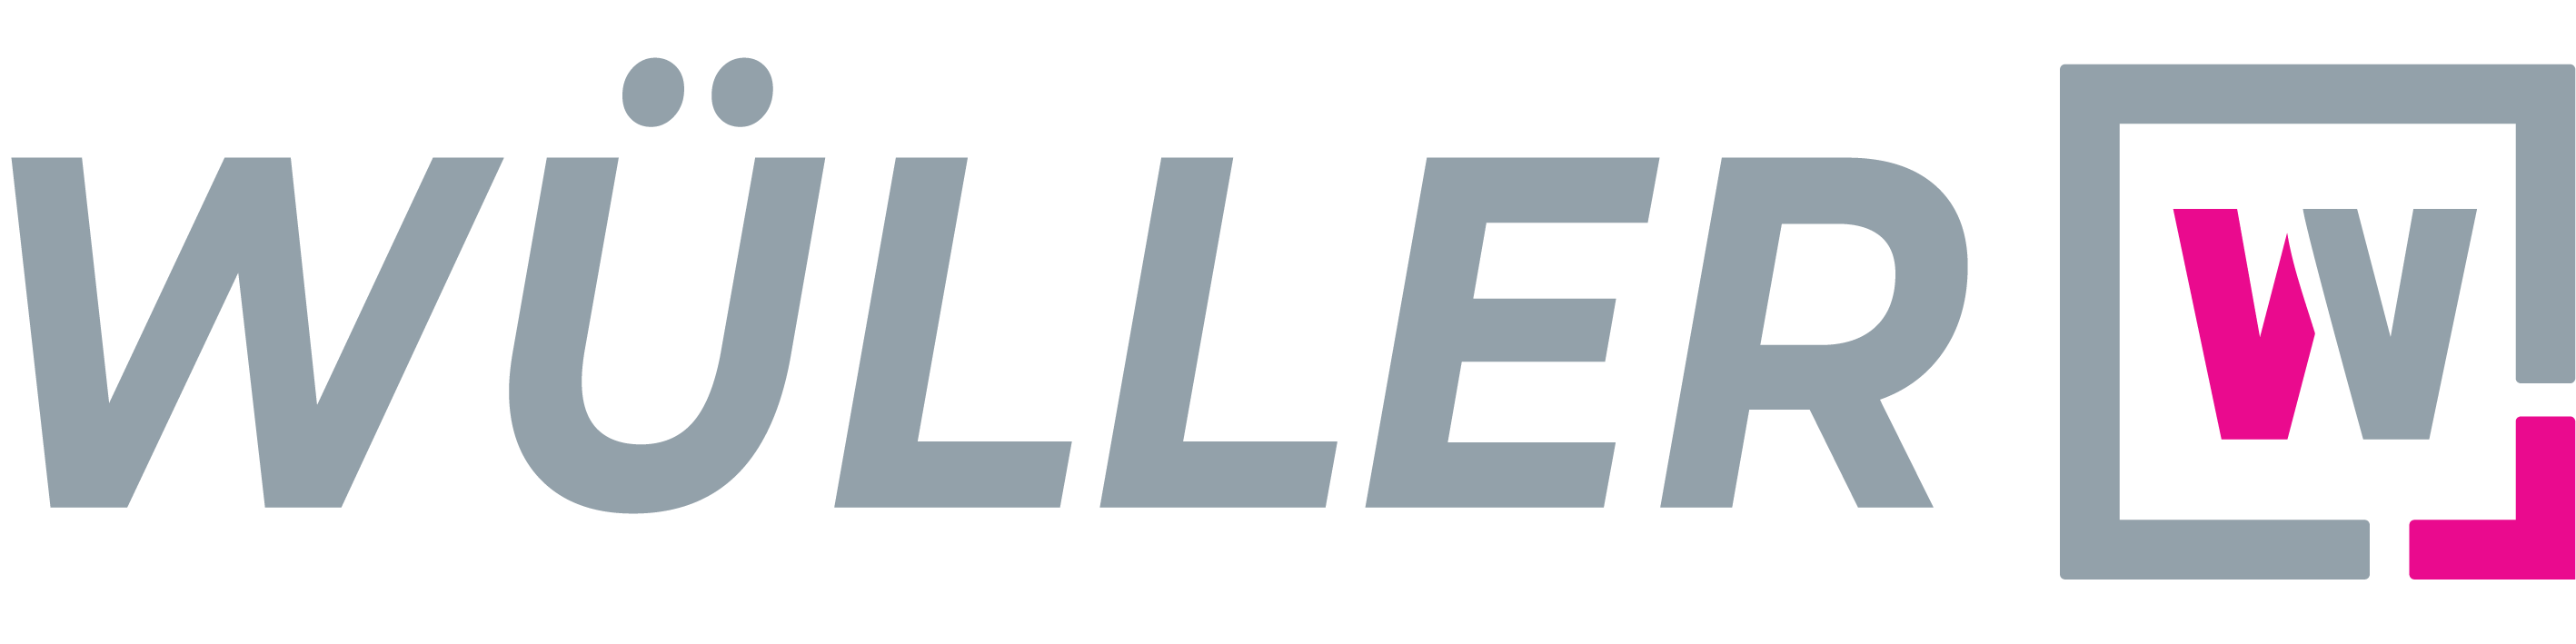 Wüller_Logo_Emblem_1000x250mm